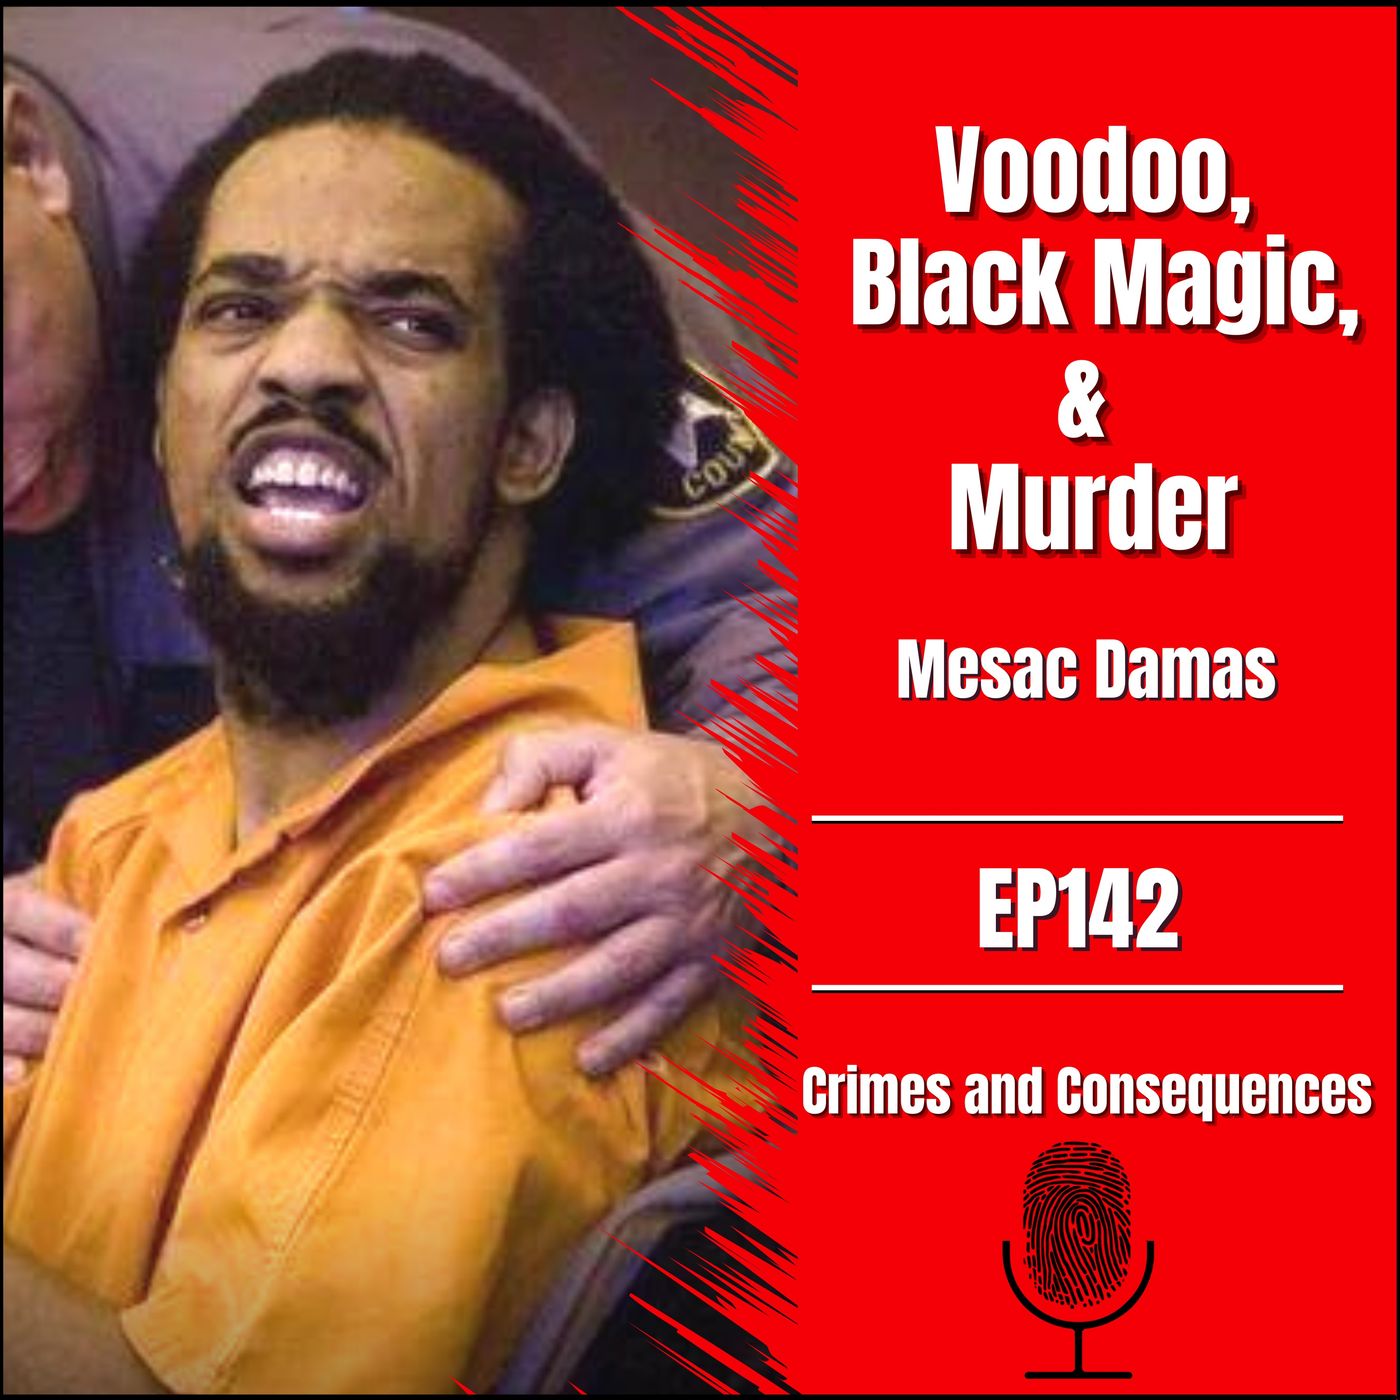 EP142: Voodoo, Black Magic and Murder